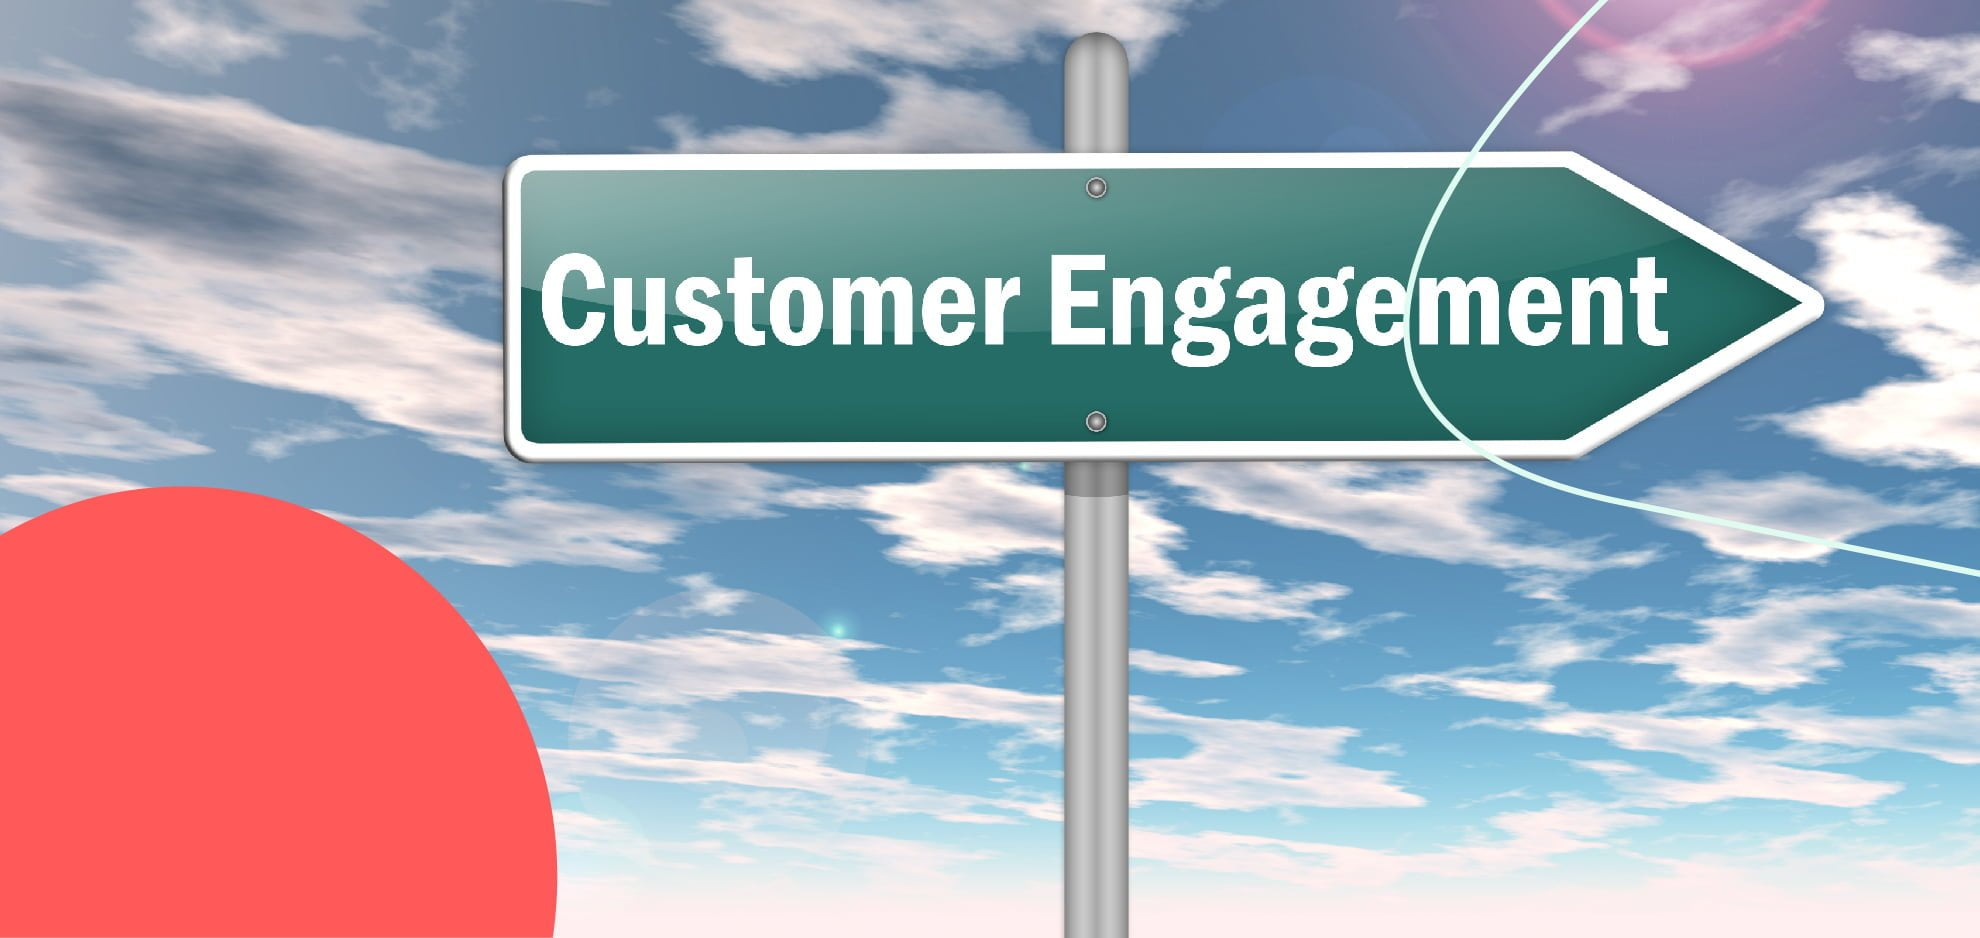 6 customer engagement tools